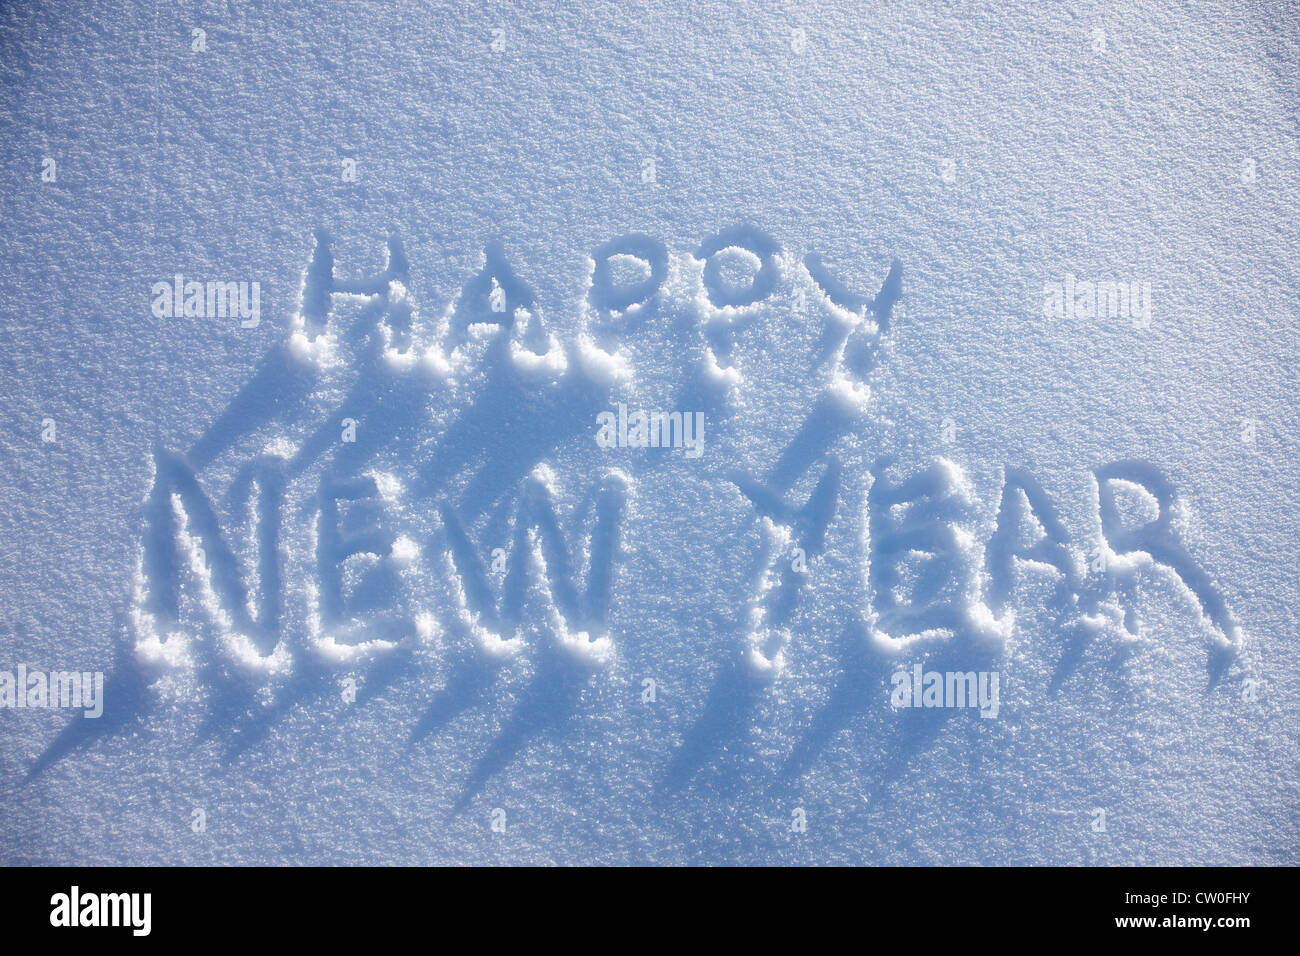 Happy New Year written in snow Stock Photo